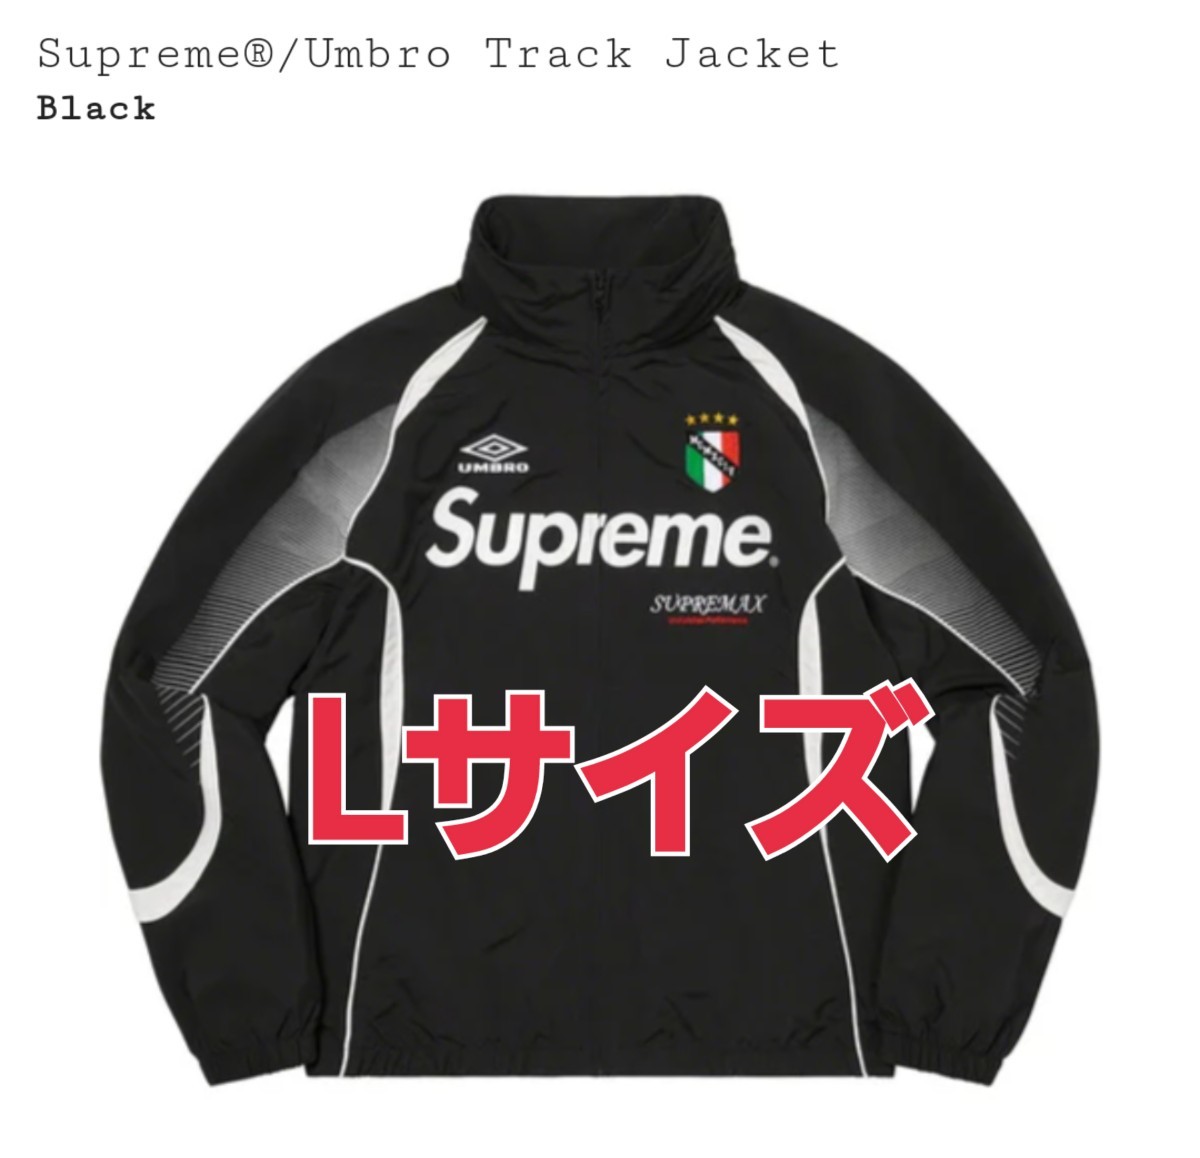 Supreme×Umbro Track Jacket Black ブラック 黒 Lサイズ Large